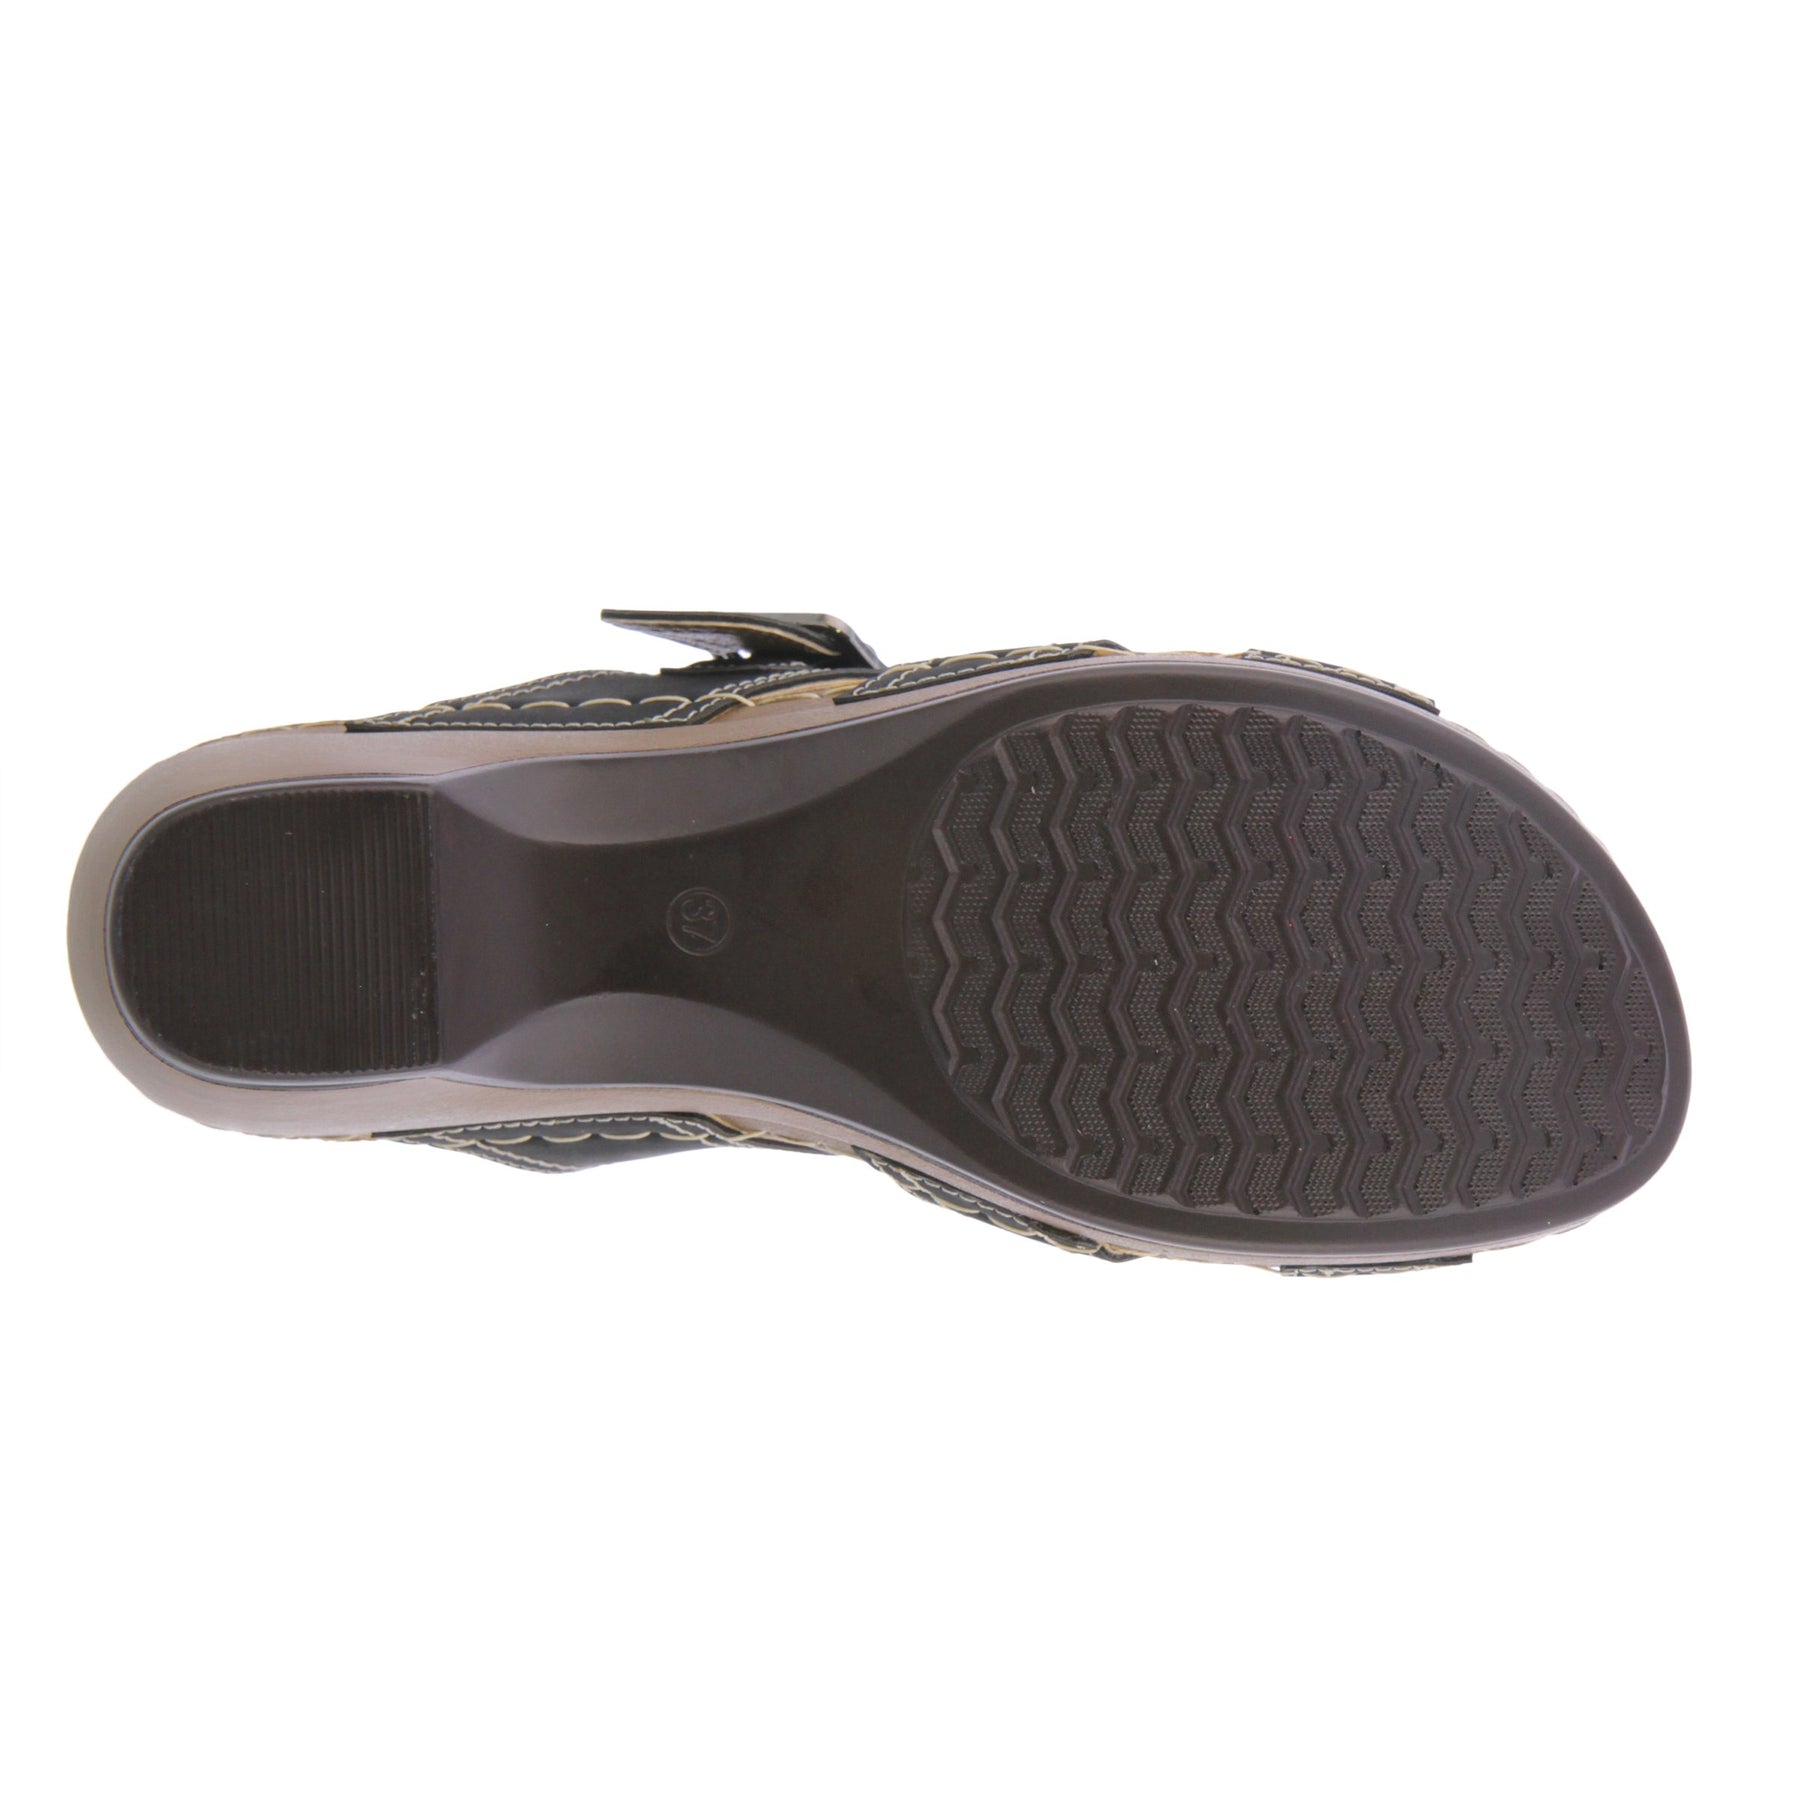 SHARA SLIDE SANDAL by PATRIZIA – Spring Step Shoes